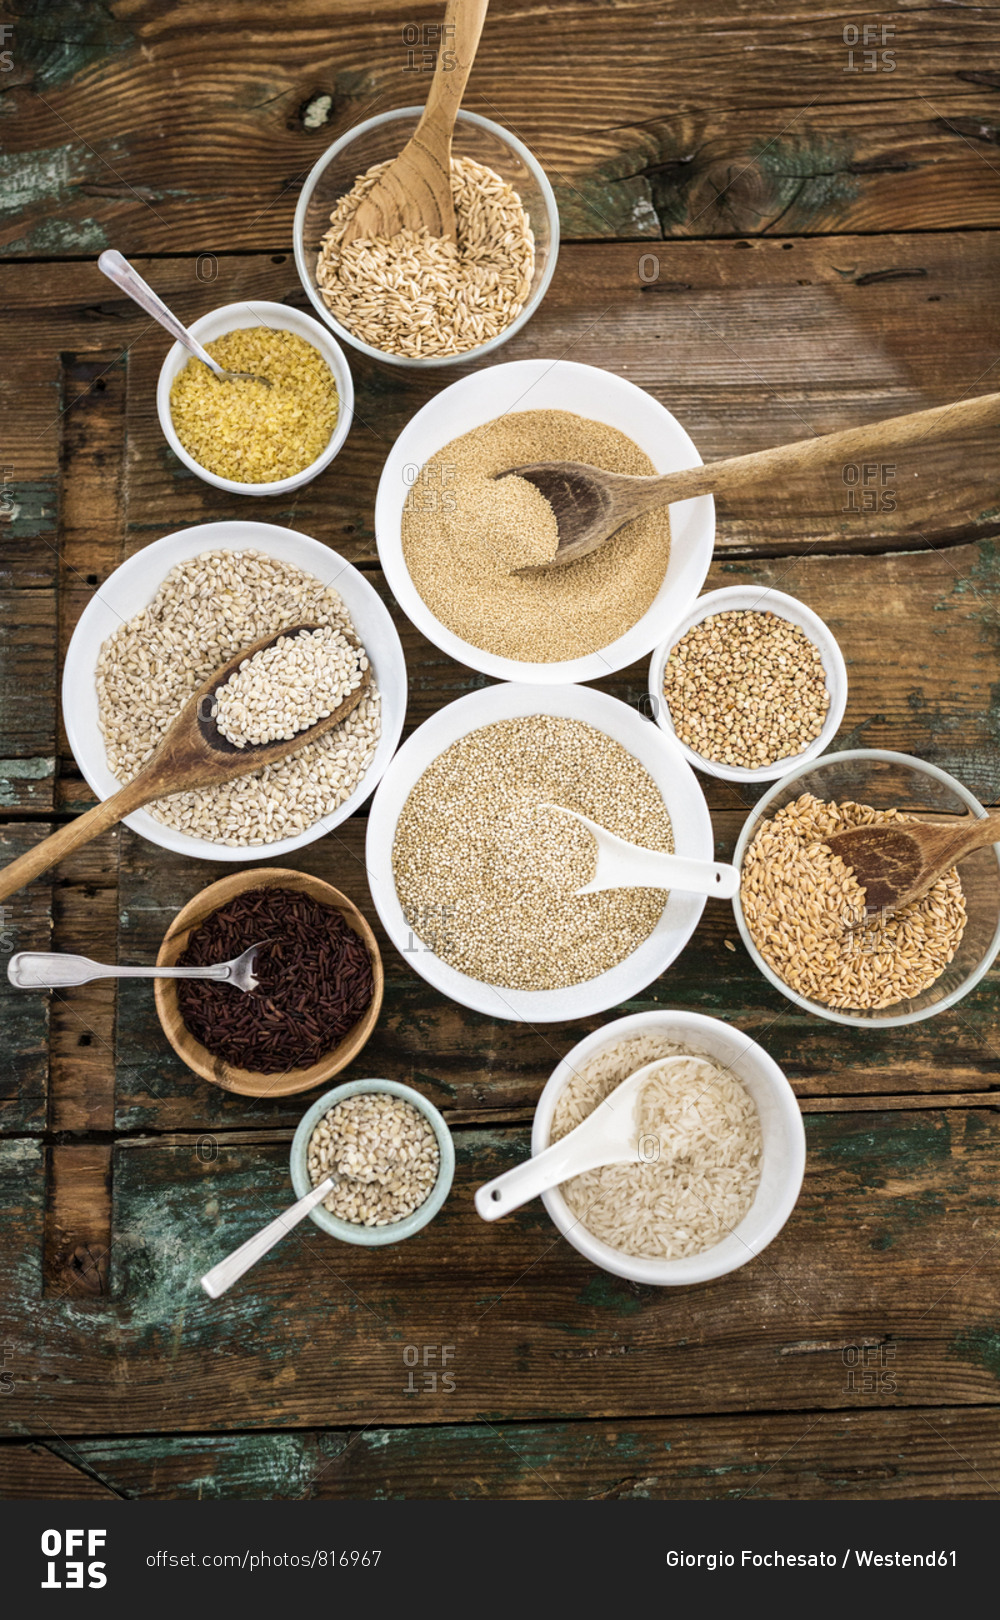 Cereal mix: red rice- barley- amaranth- quinoa- rice- bulgur- spelt- oats and buckwheat